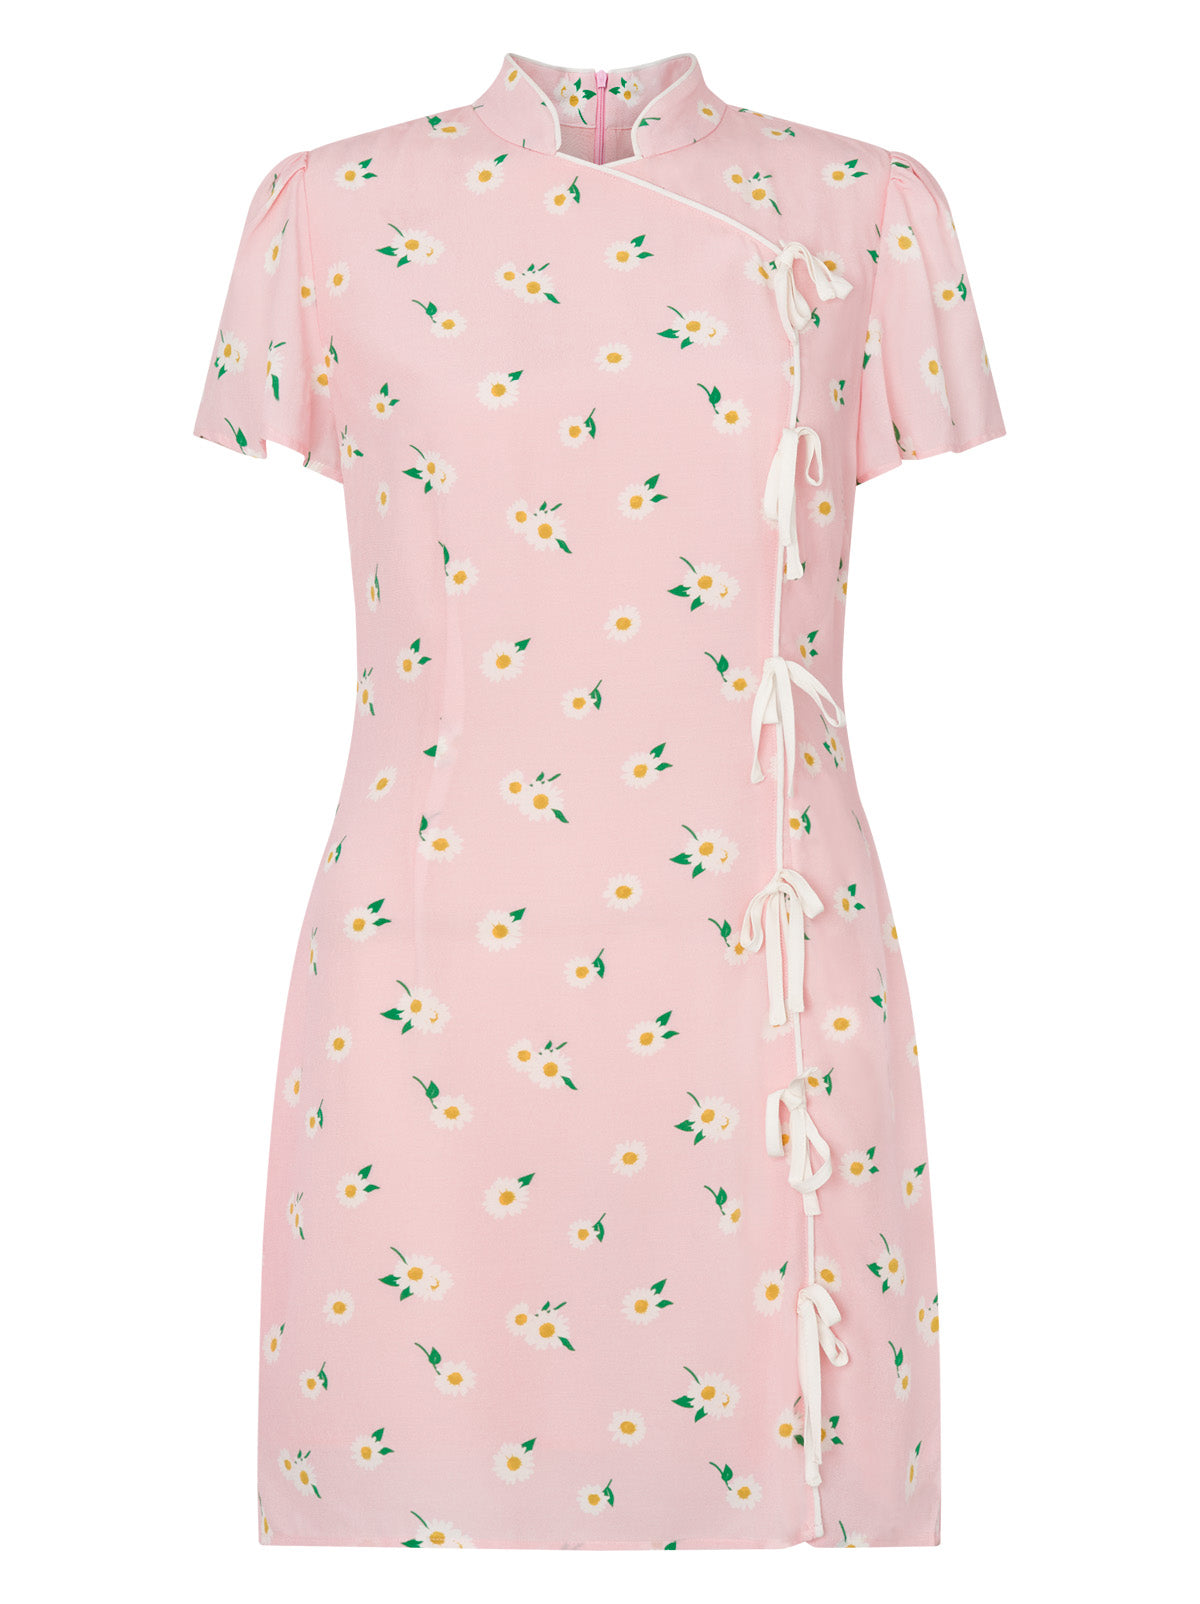 Harlow Pink Daisy Mini Dress by KITRI Studio